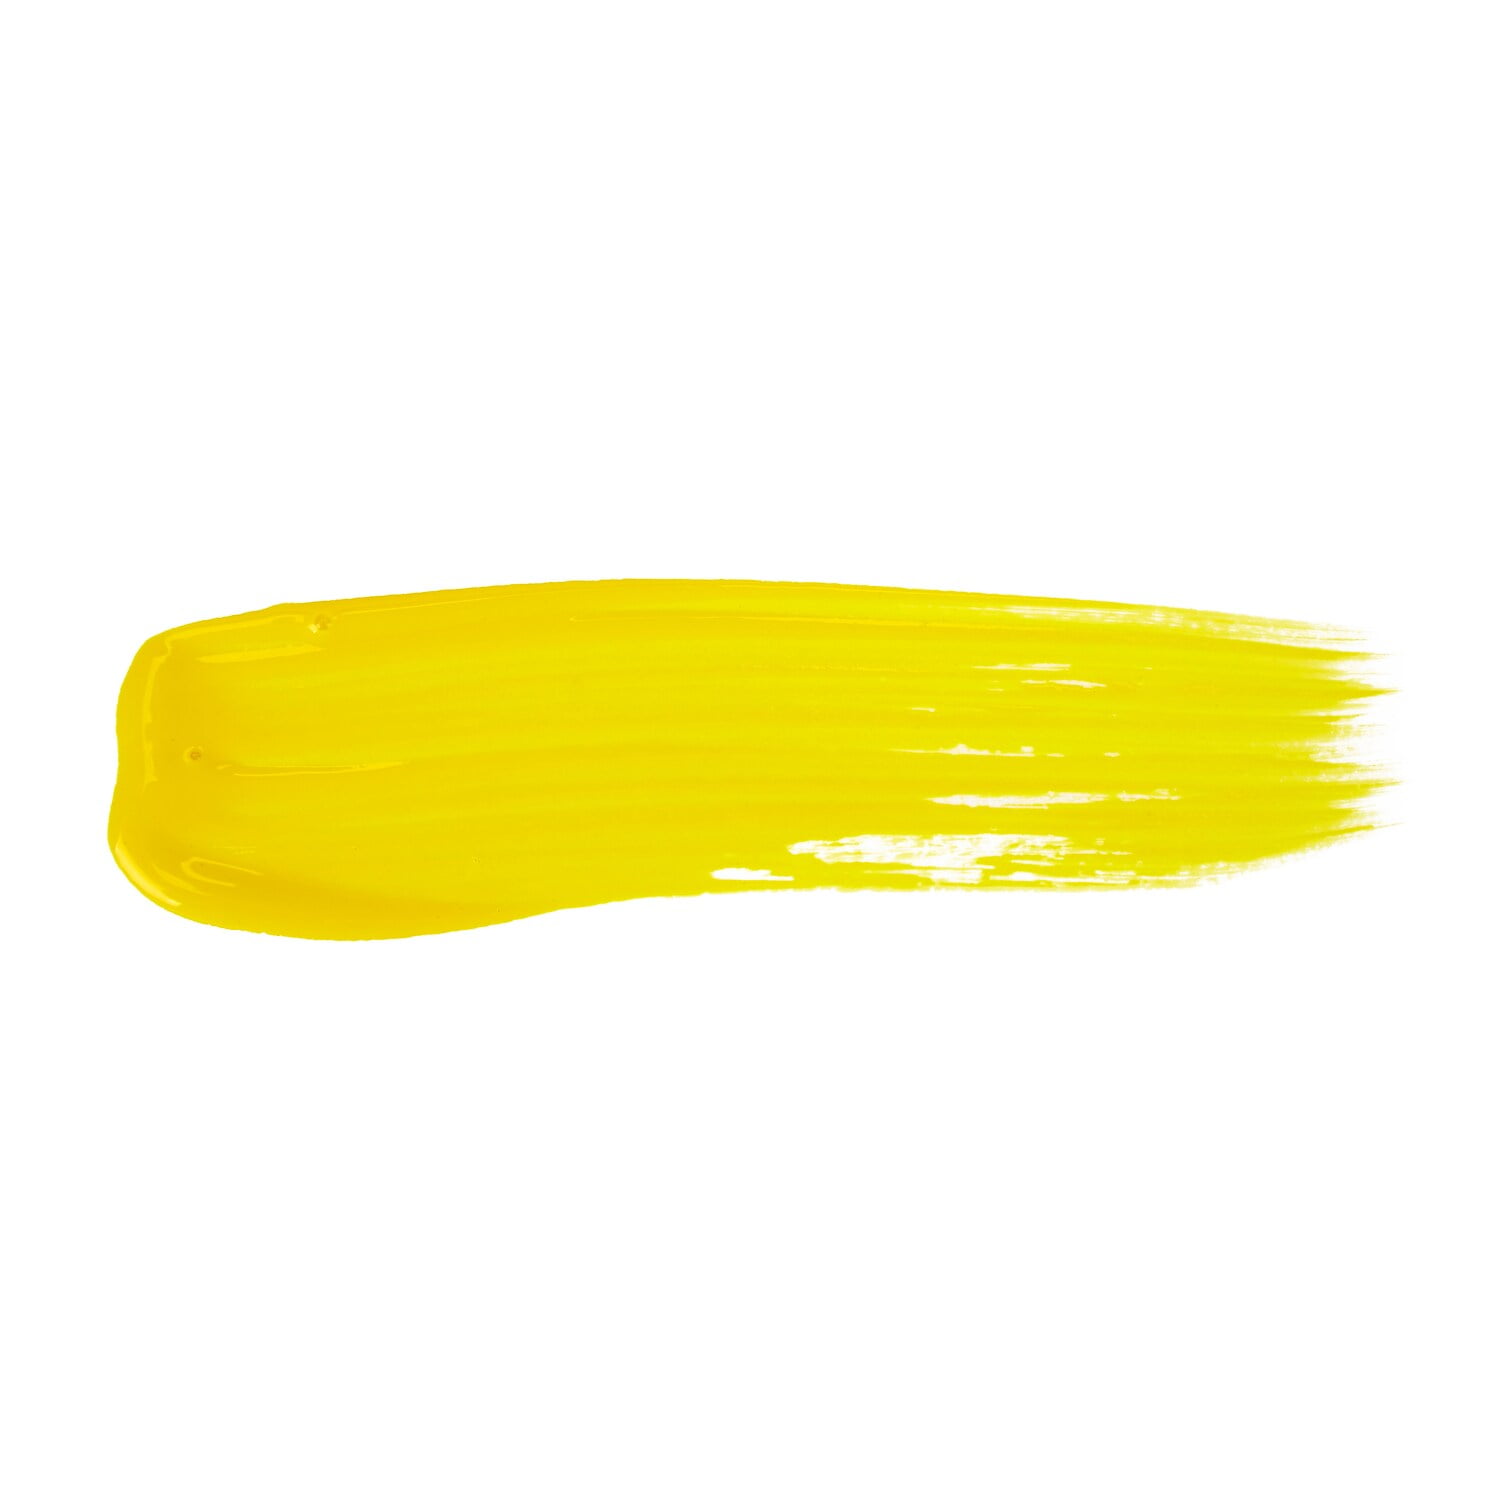 Crayola CYO543132034 Artista II Washable Tempera Paint, Yellow, 32 oz